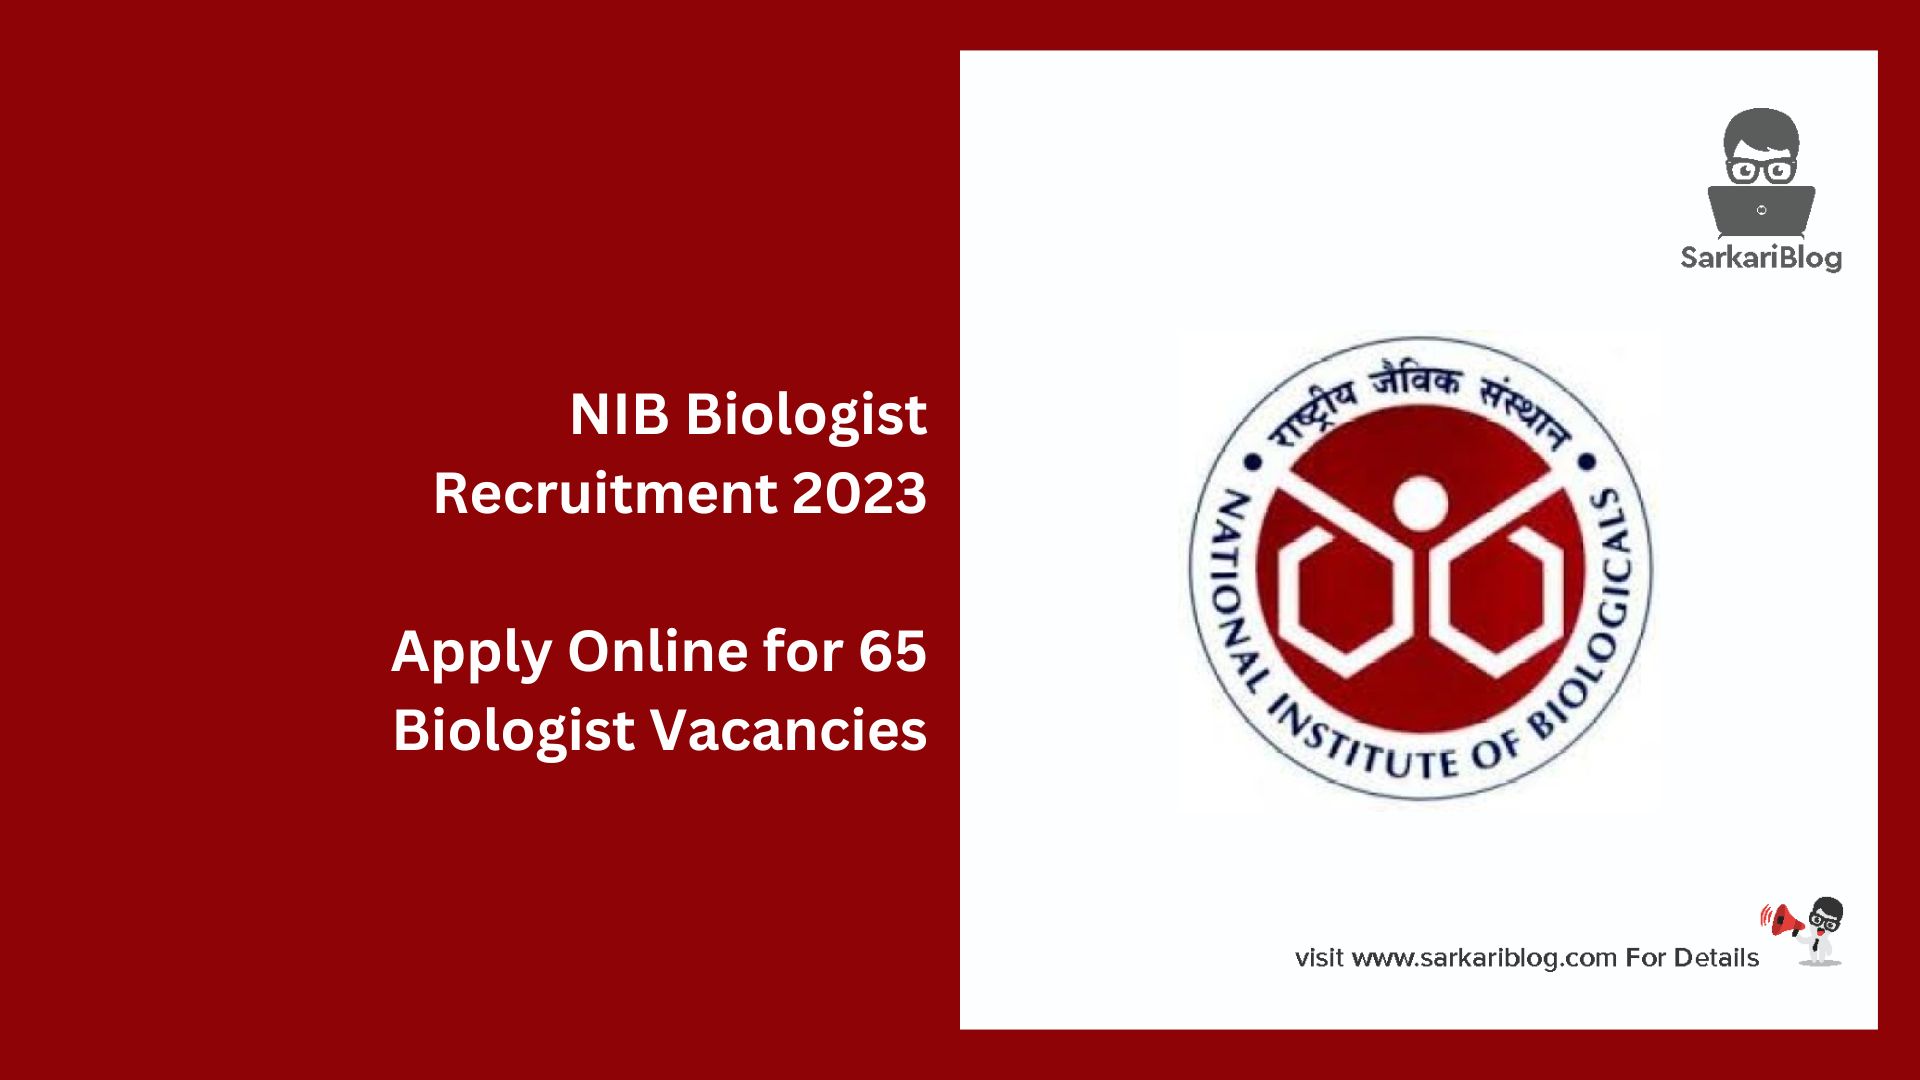 NIB Biologist Recruitment 2023